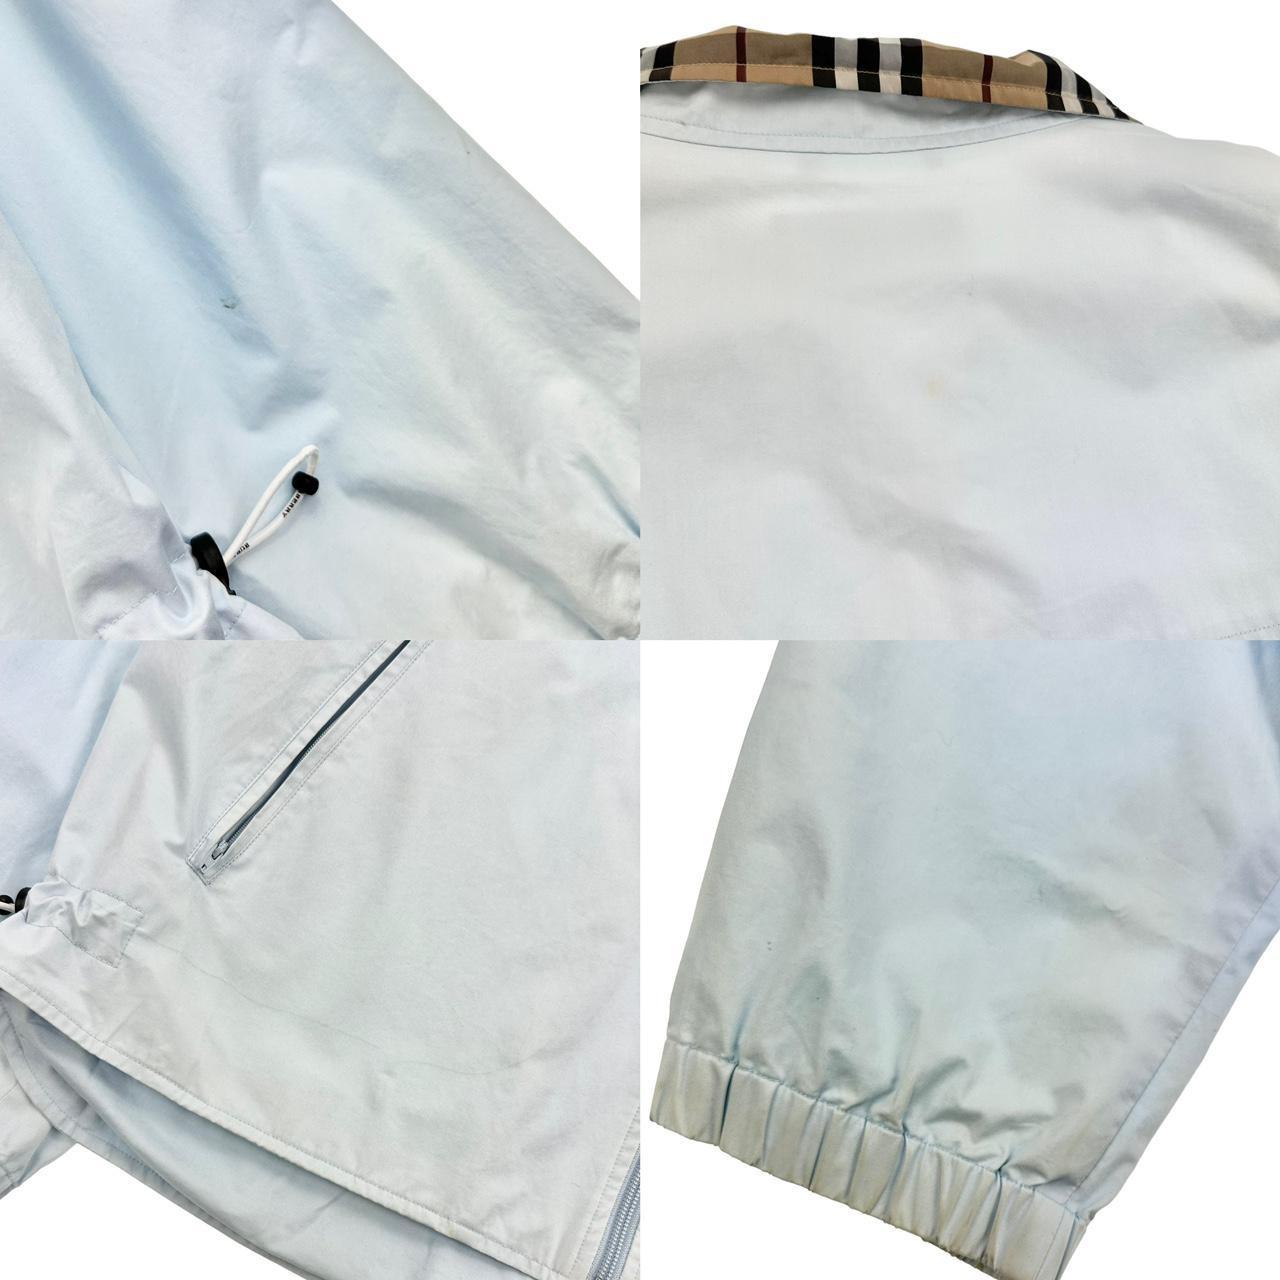 Vintage Burberry Nova Check Collar Jacket size XL - Known Source